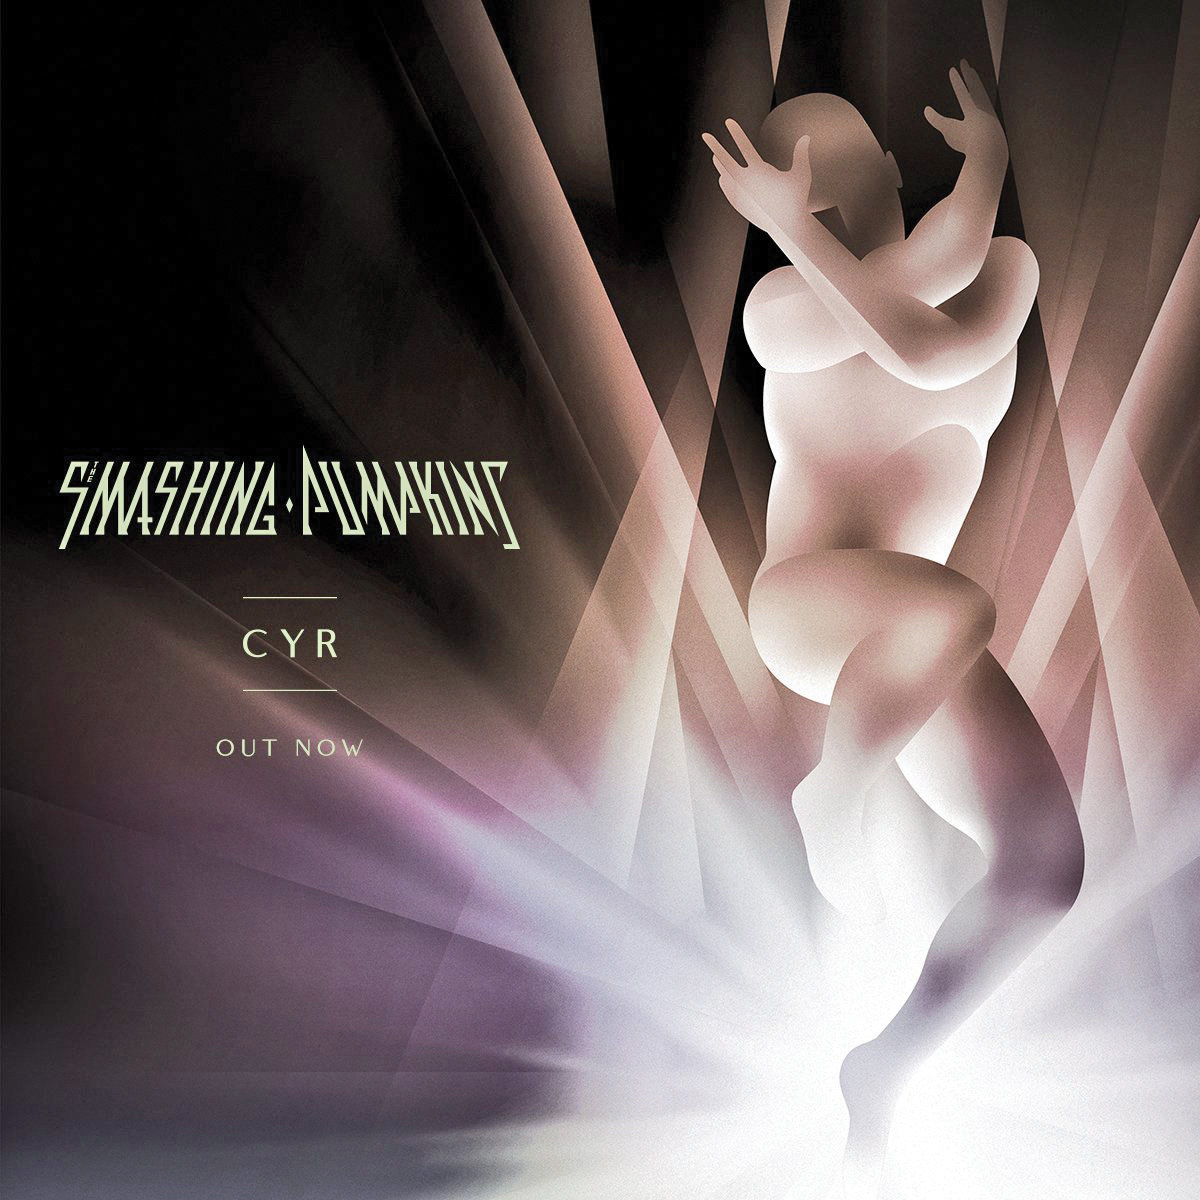 Smashing Pumpkins announce new double-album 'Cyr